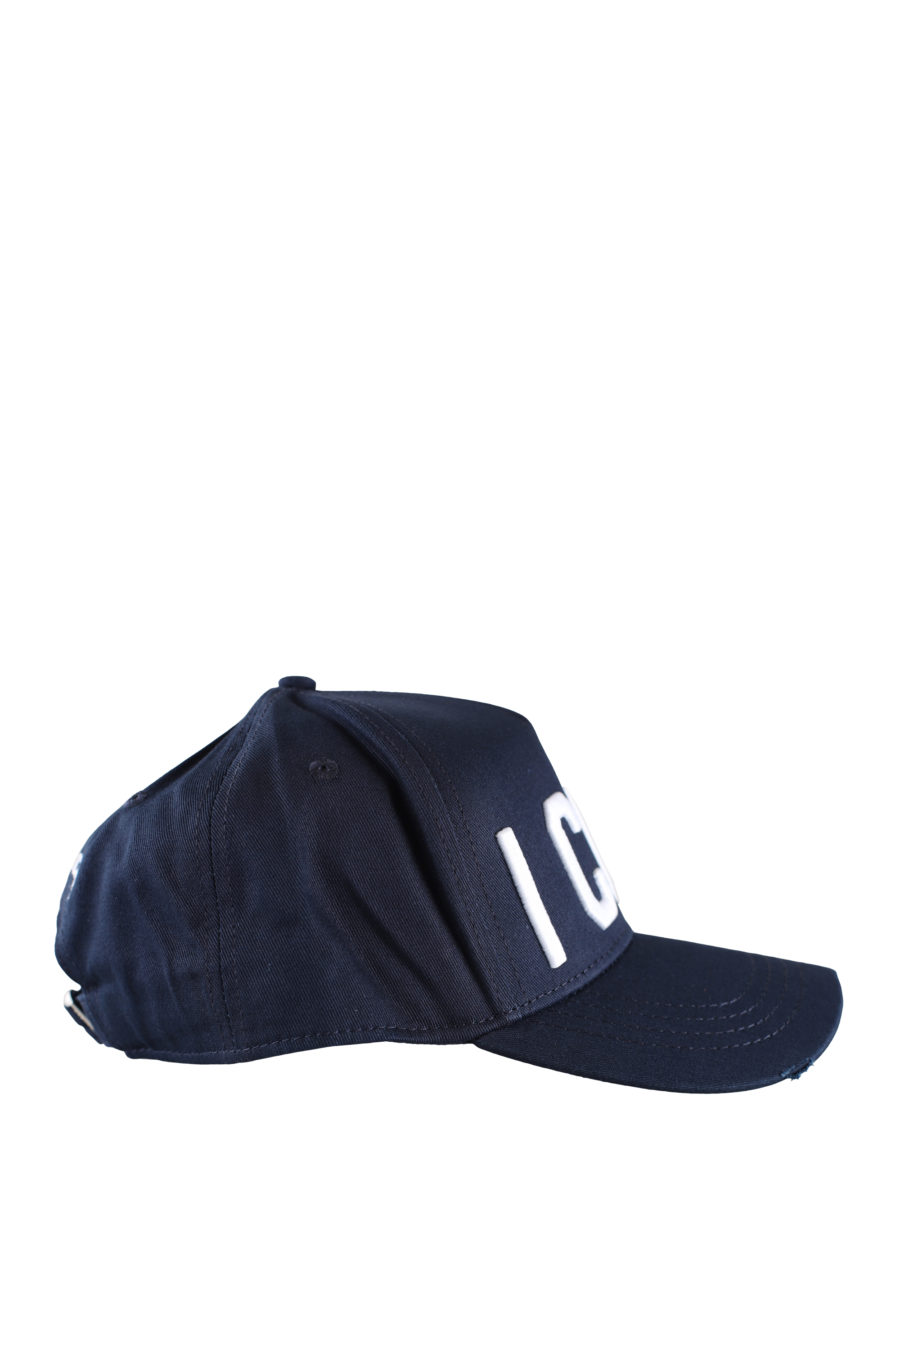 Adjustable blue cap with white "icon" logo - IMG 0003